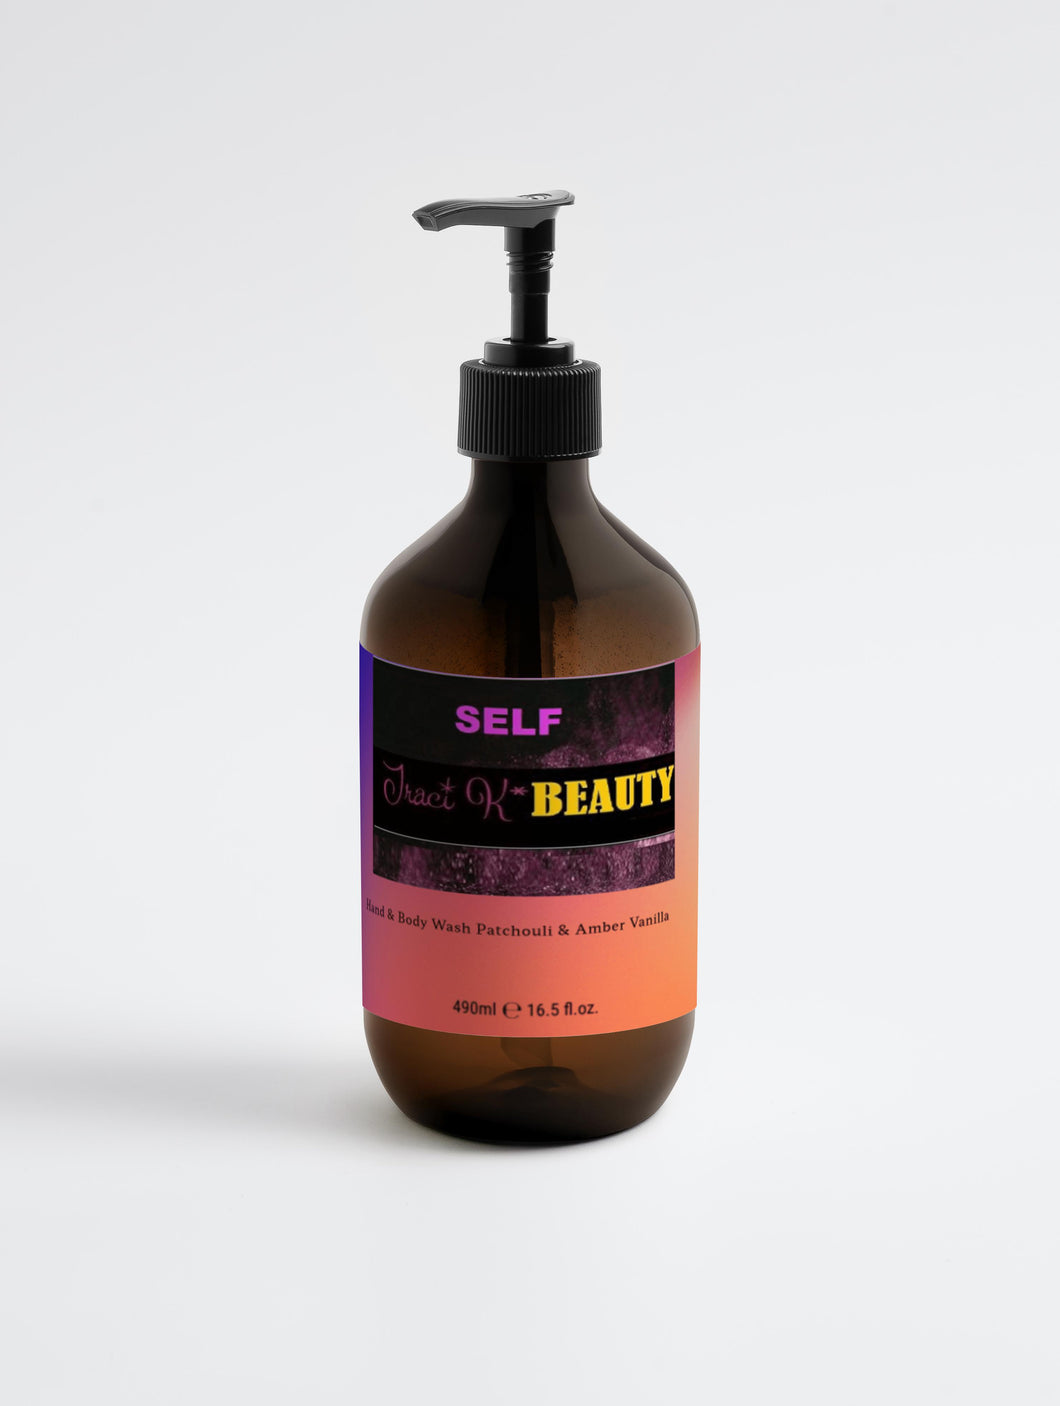 SELF by Traci K Beauty Hand & Body Wash, Patchouli & Amber Vanilla